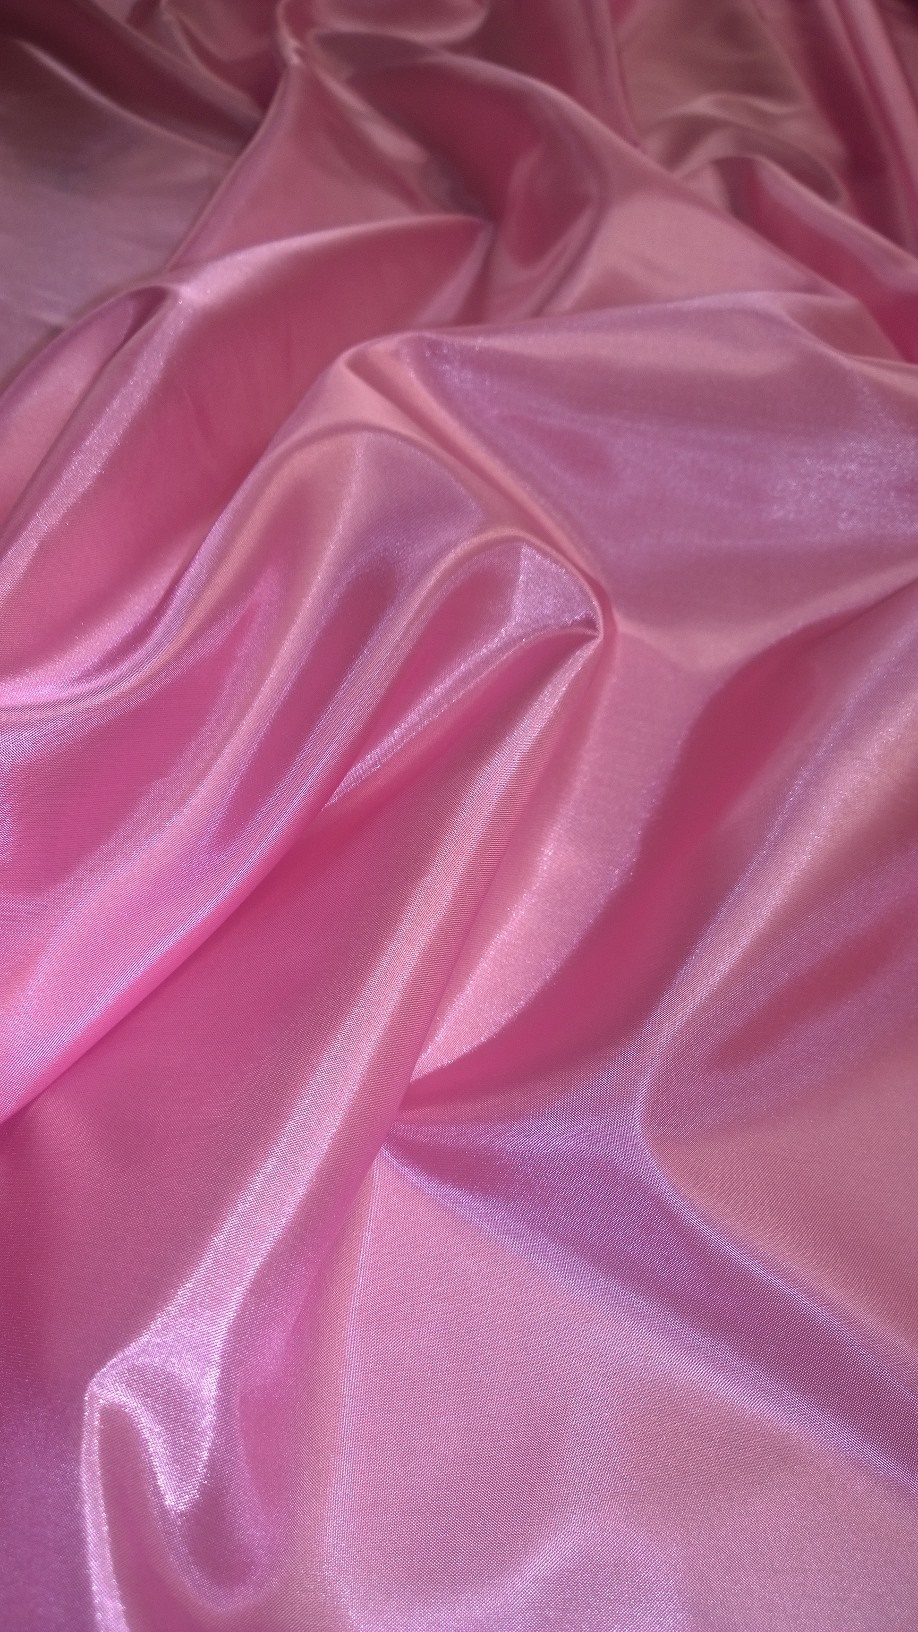 By The Yard- 60" Paris Pink Habotai Fabric - 100% Polyester